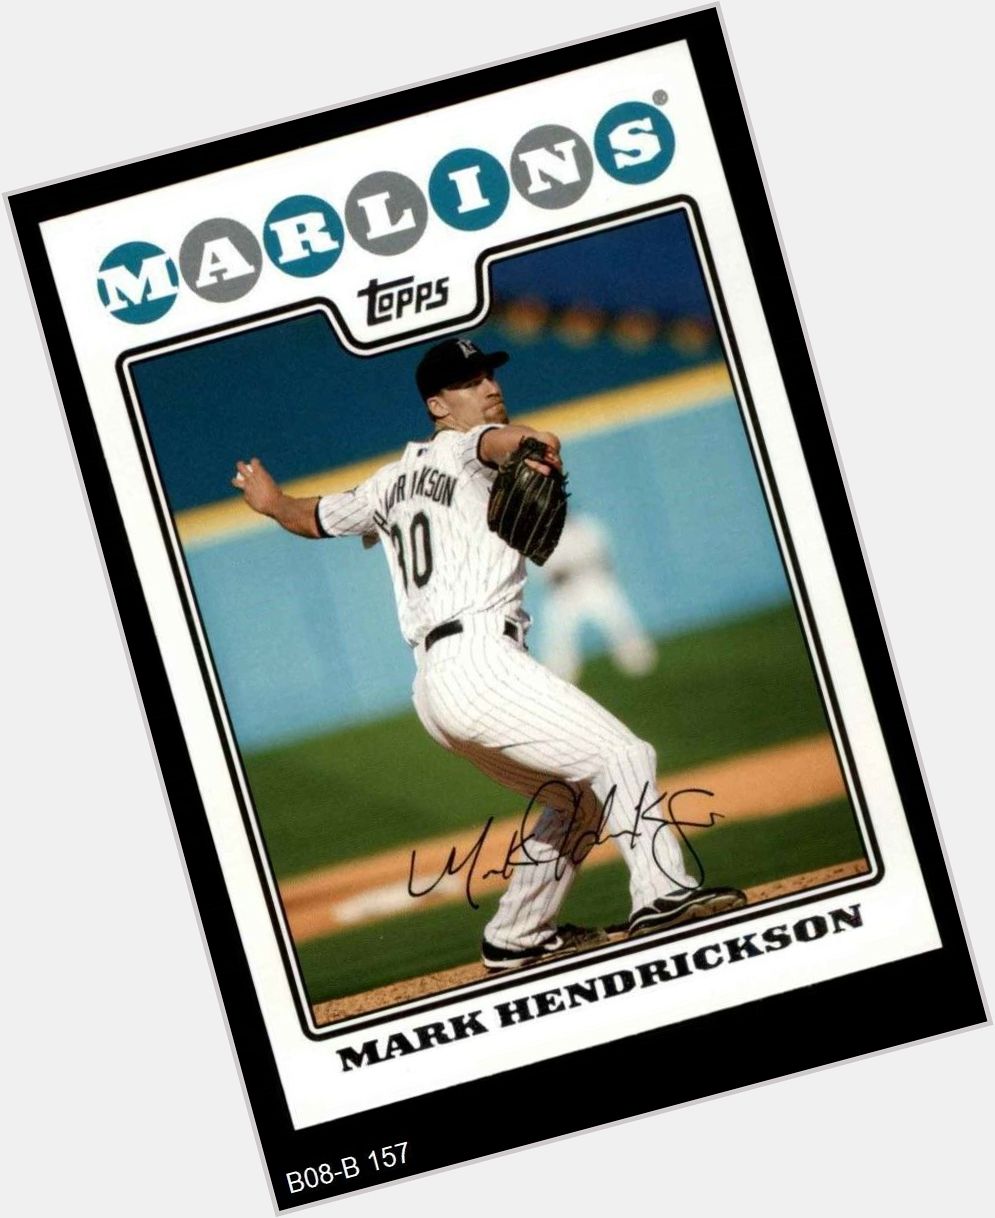 Happy birthday to former Florida pitcher Mark Hendrickson! 